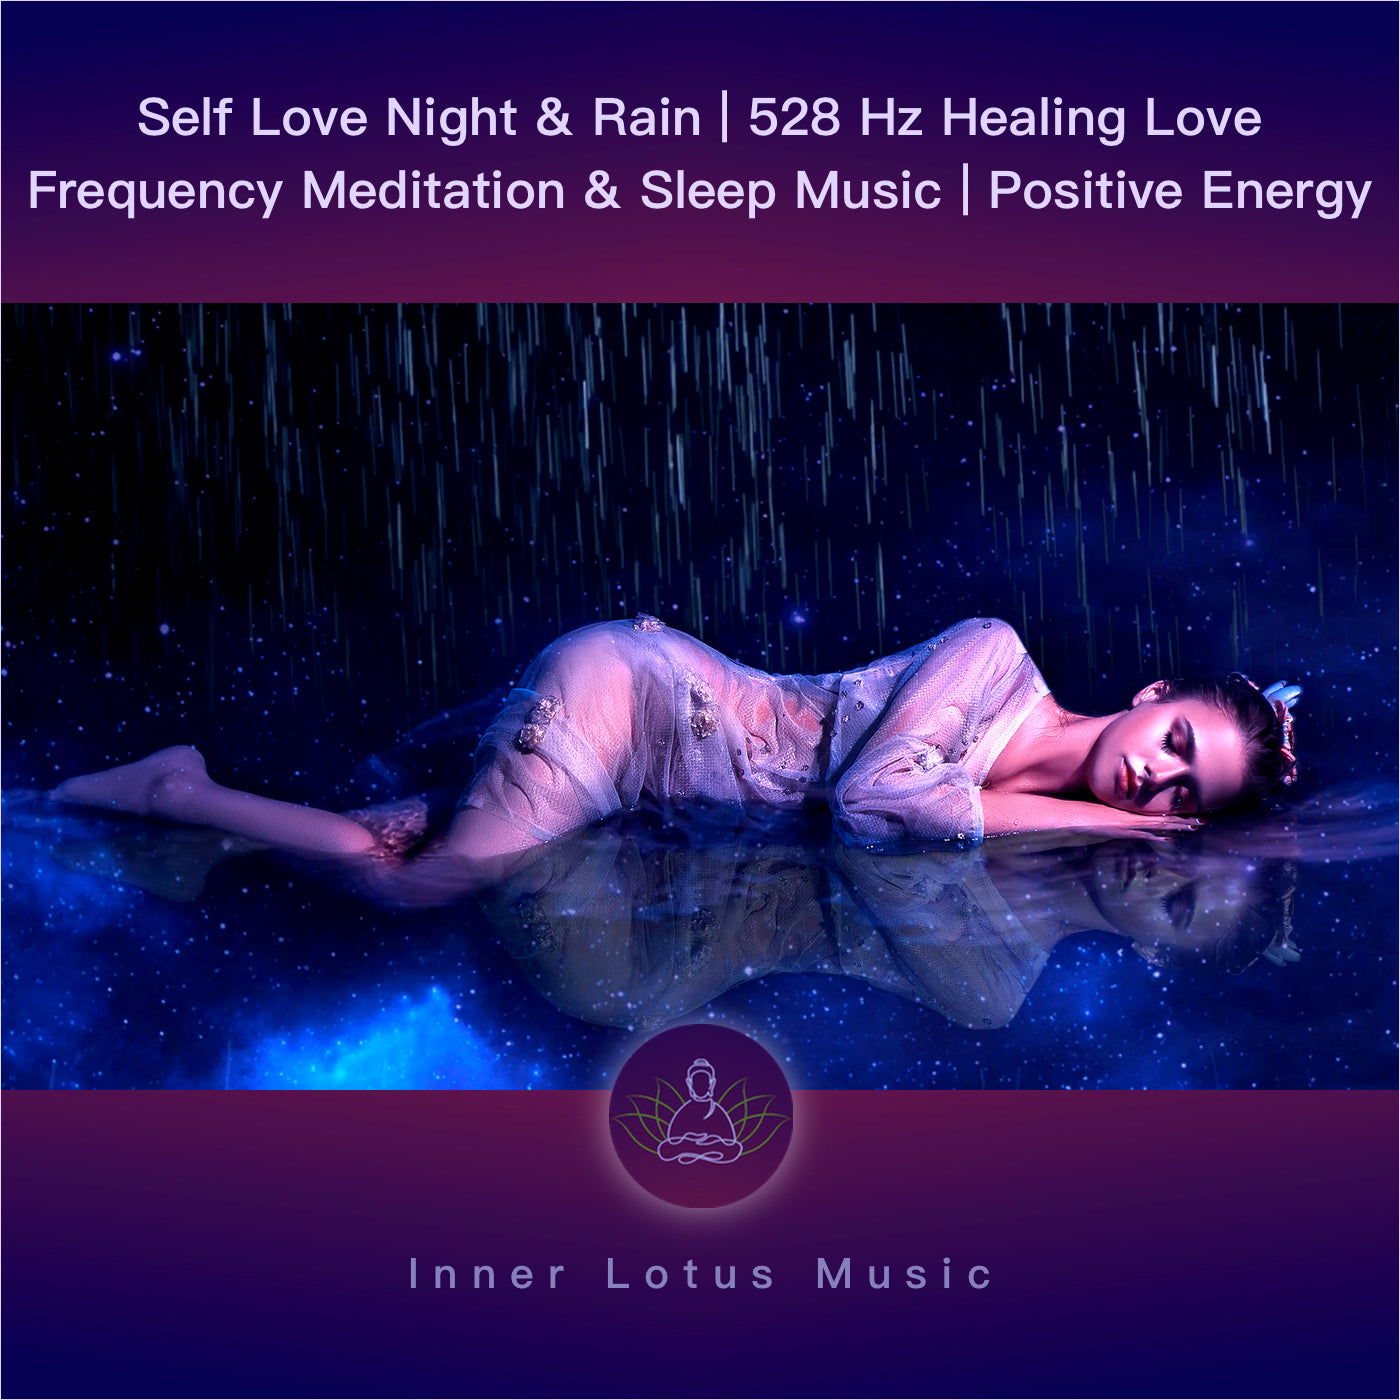 Self Love Night & Rain | 528 Hz Healing Love Frequency Meditation & Sleep Music | Positive Energy